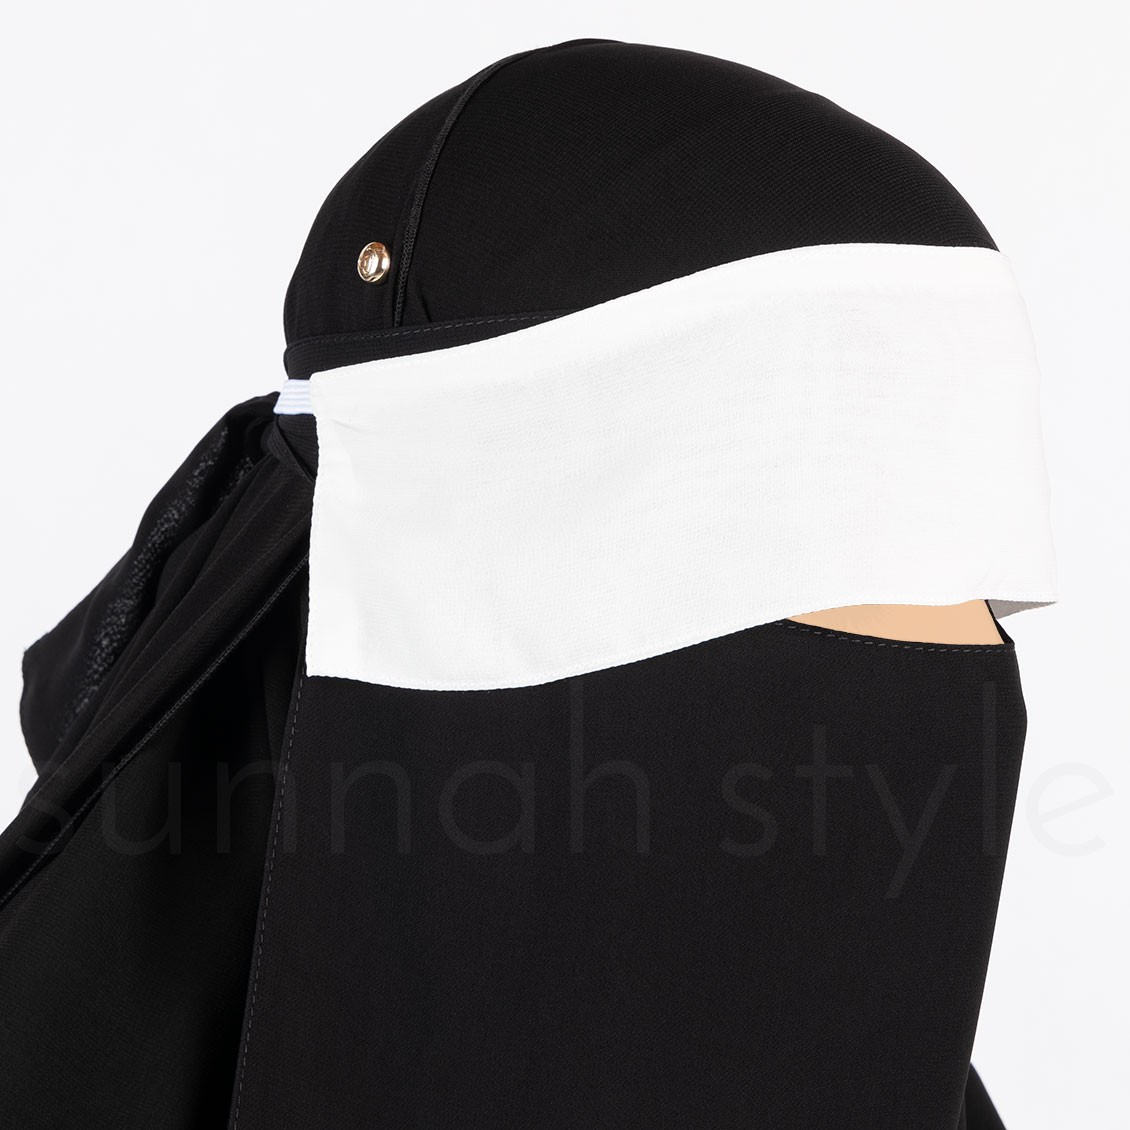 Sunnah Style Adjustable Niqab Flap White